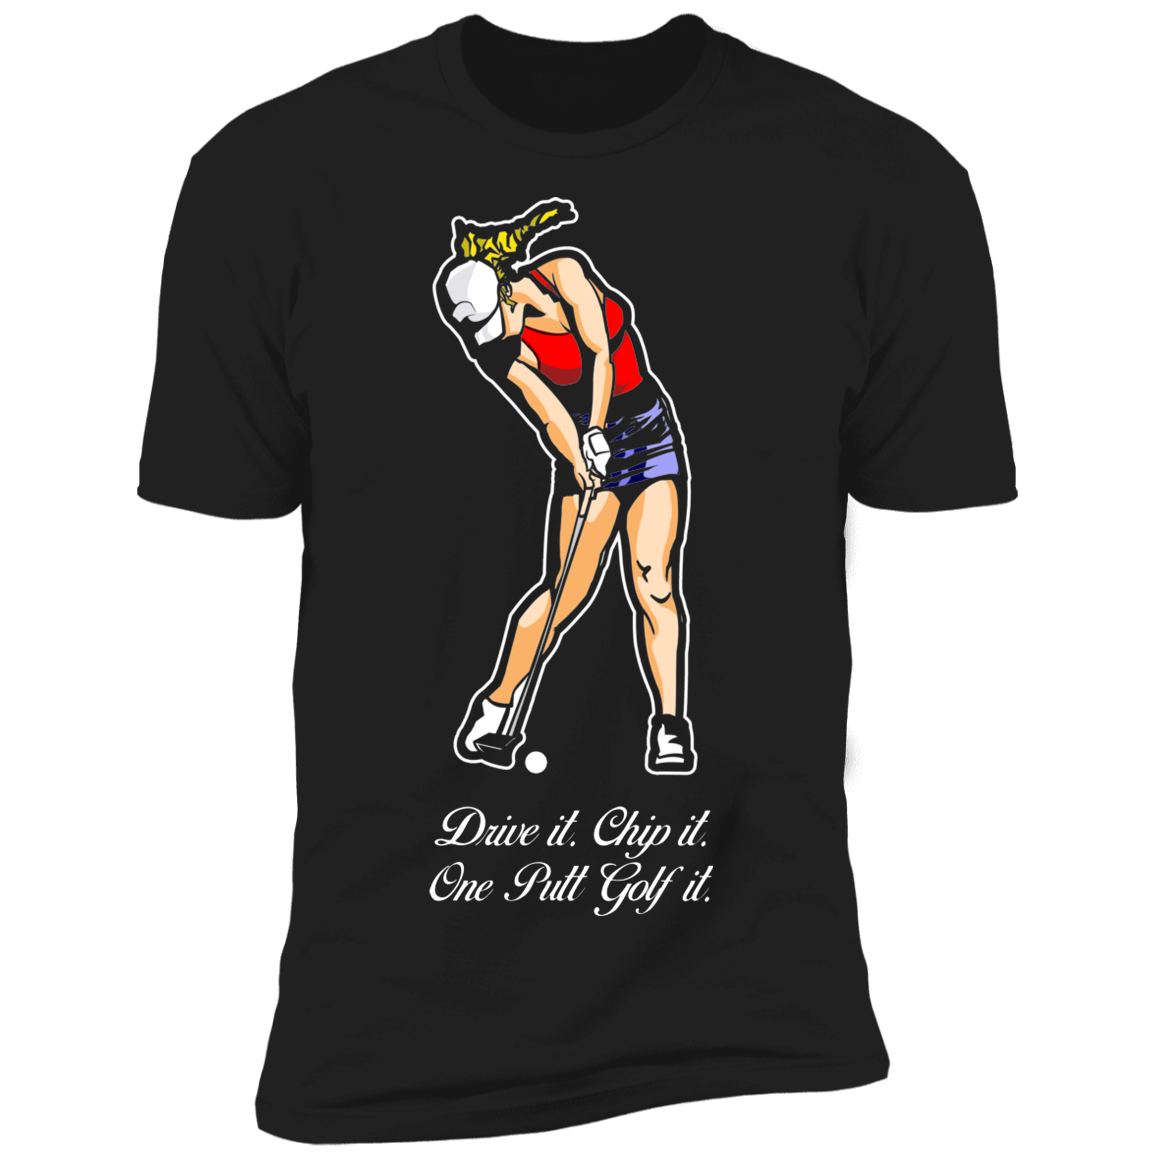 OPG Custom Design #9. Drive it. Chip it. One Putt Golf It. Golf So. Cal. 100% Ring Spun Cotton T-Shirt